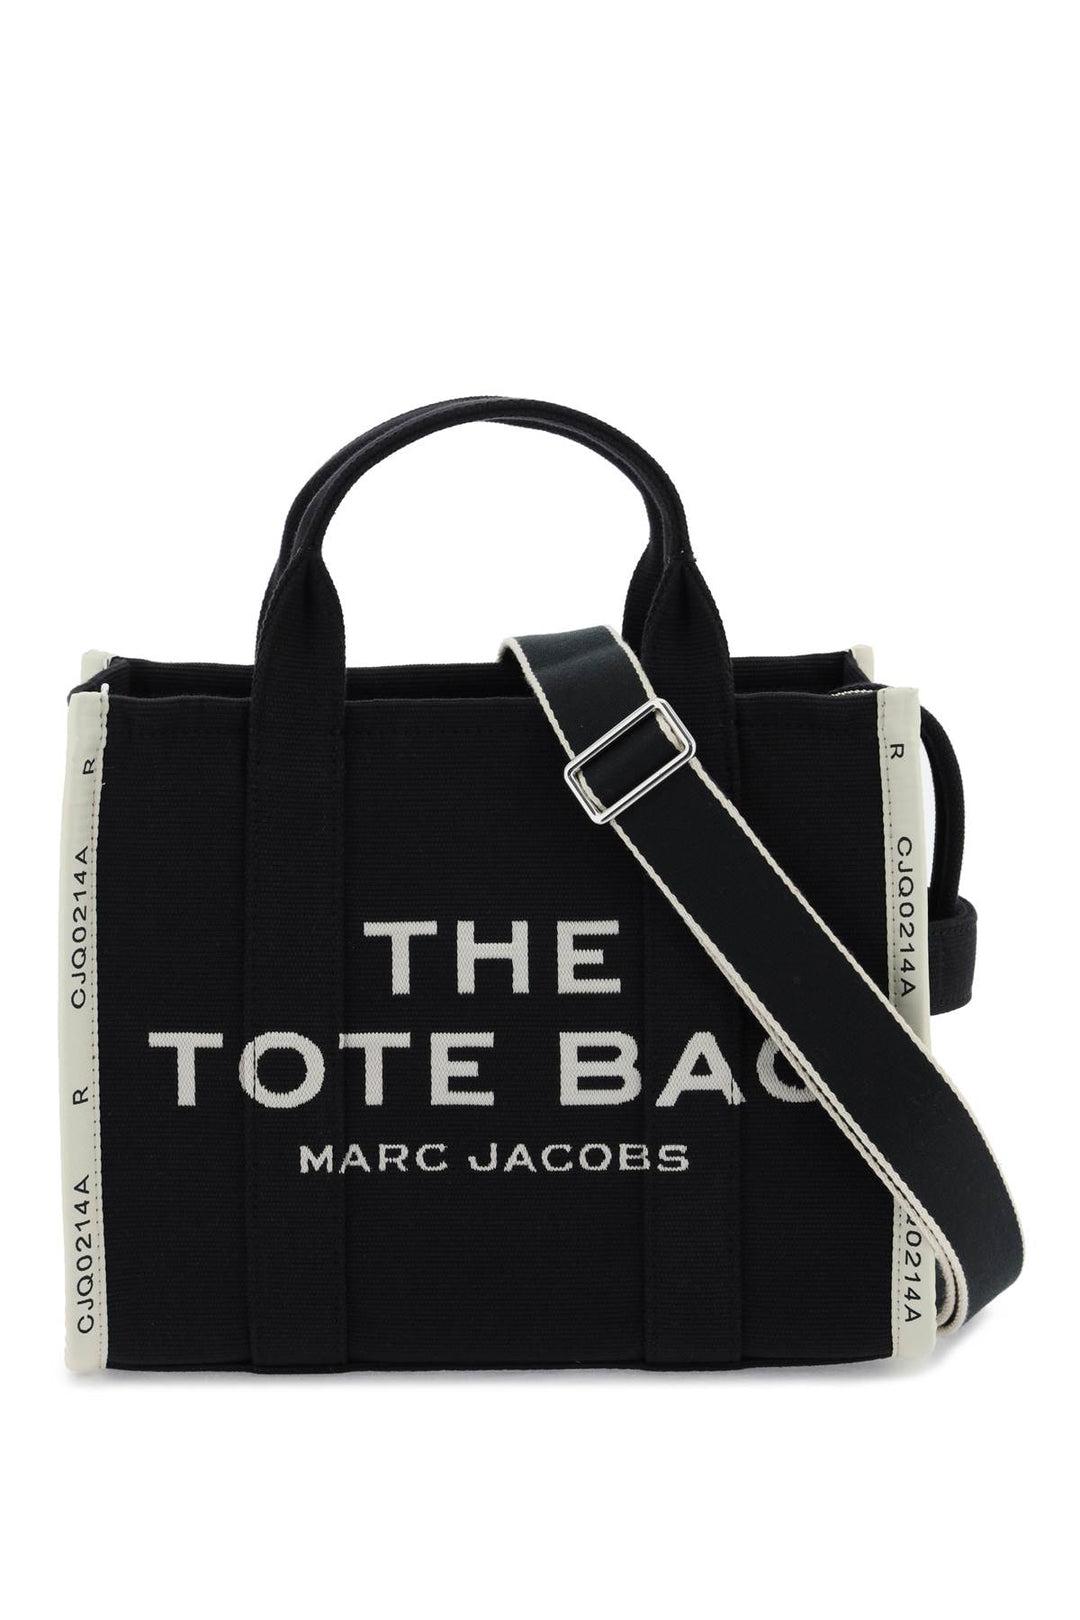 Borsa The Jacquard Medium Tote Bag - Marc Jacobs - Donna